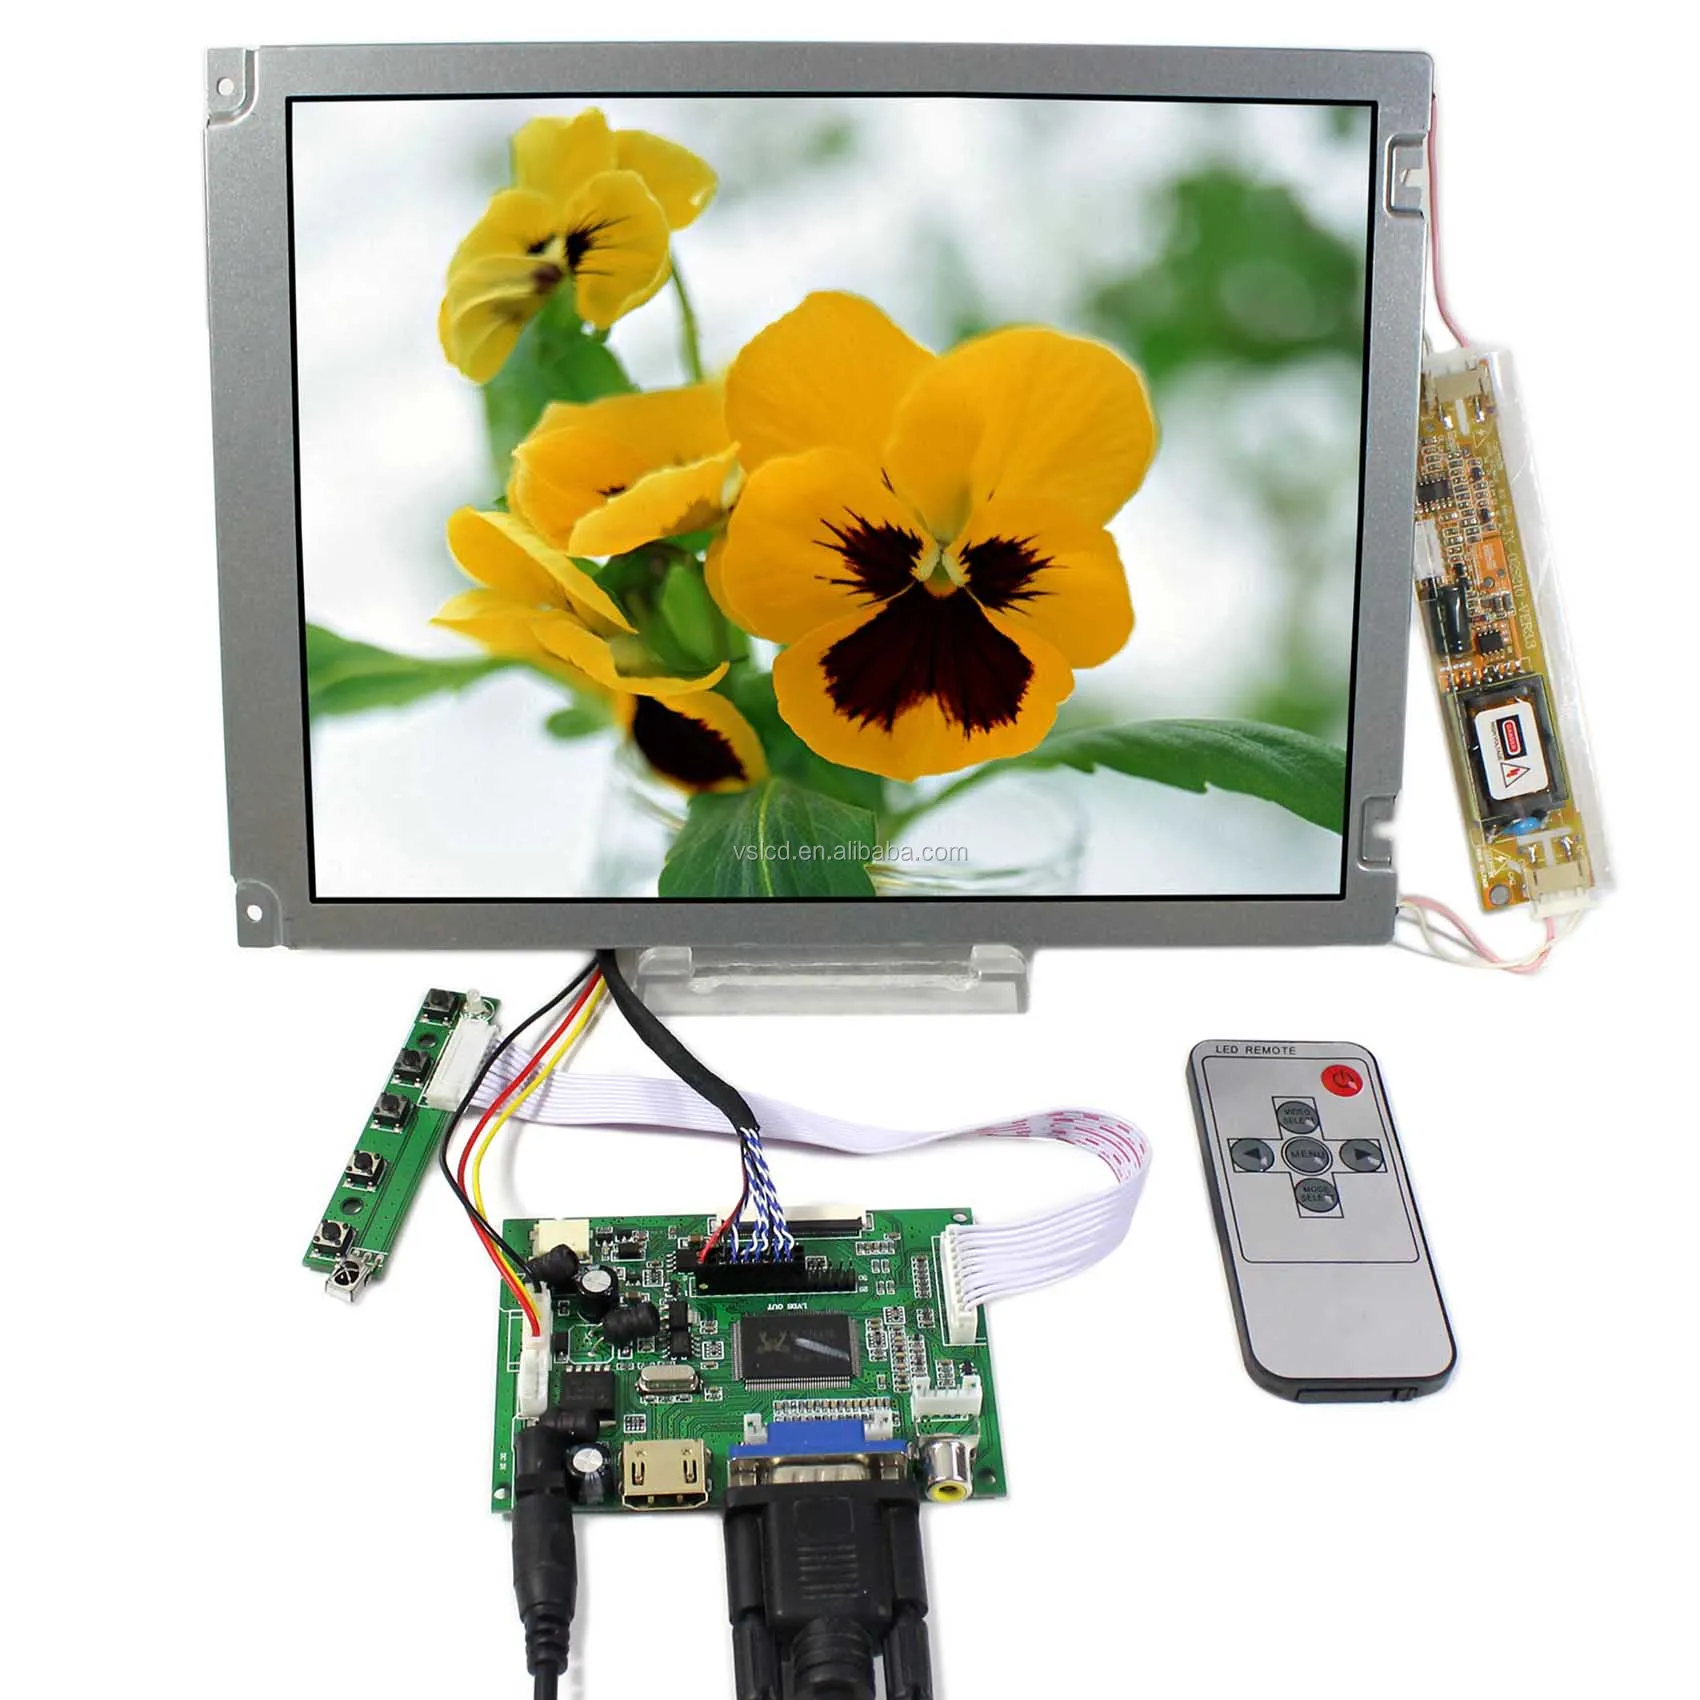 VS-TY2662V1 30pin LVDS 50pin TTL Interface LCD Controller Board E Bike LCD TV Advertising 10.4inch 800x600 Digital LCD Display